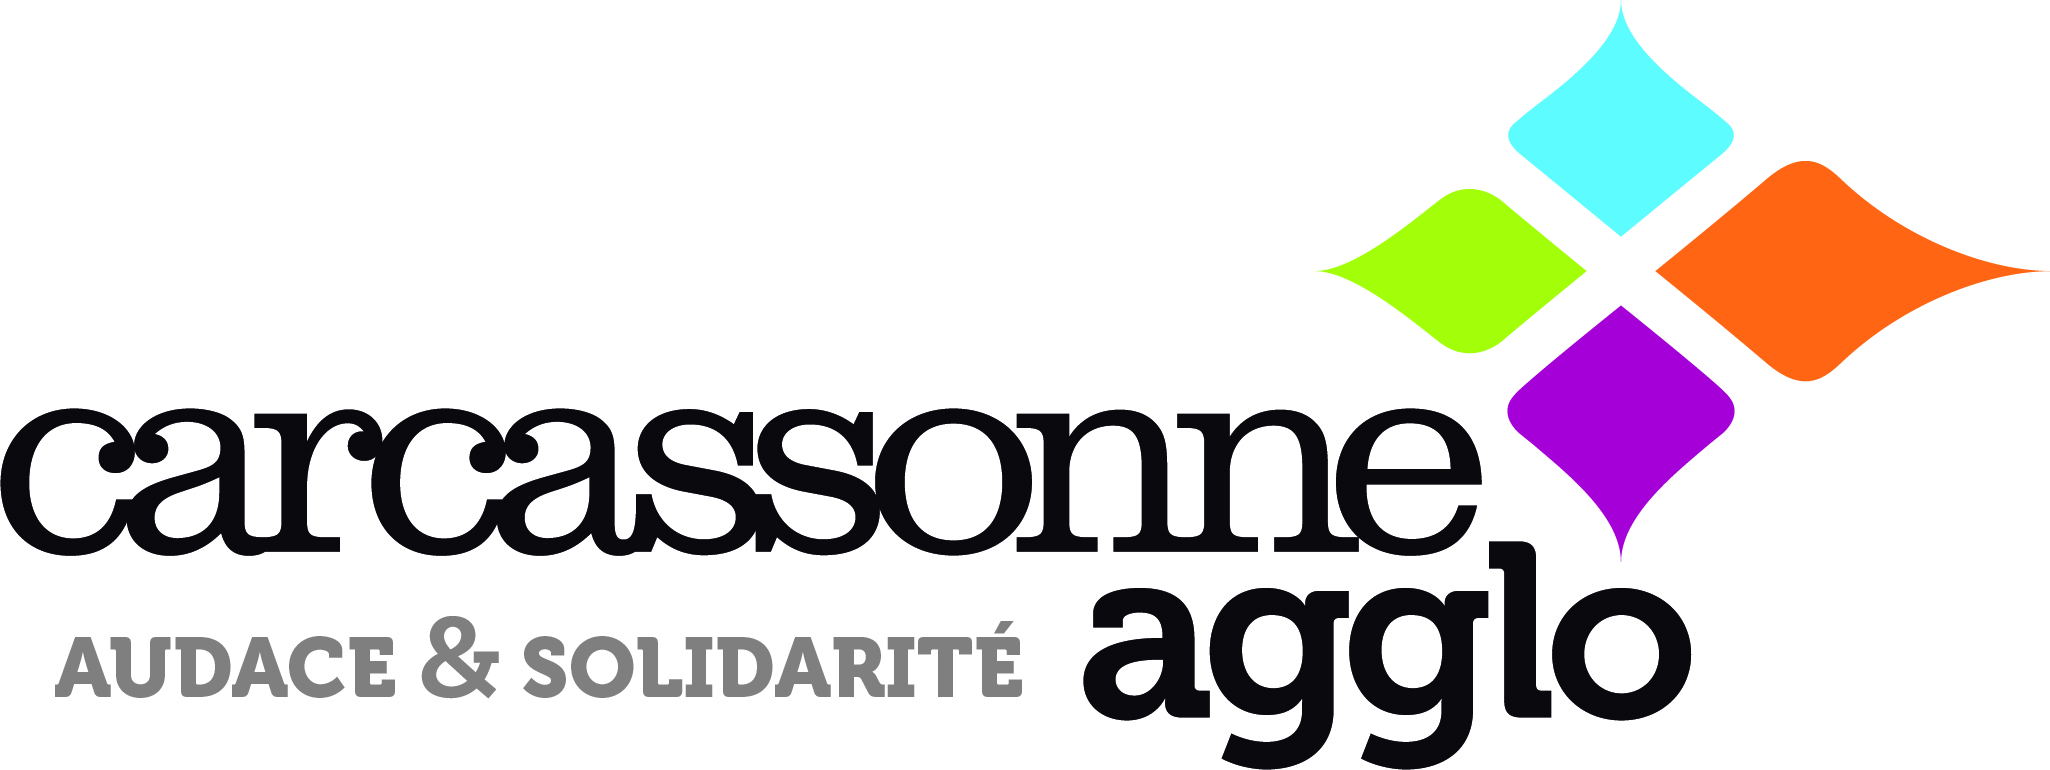 Logo Carcassonne Agglo